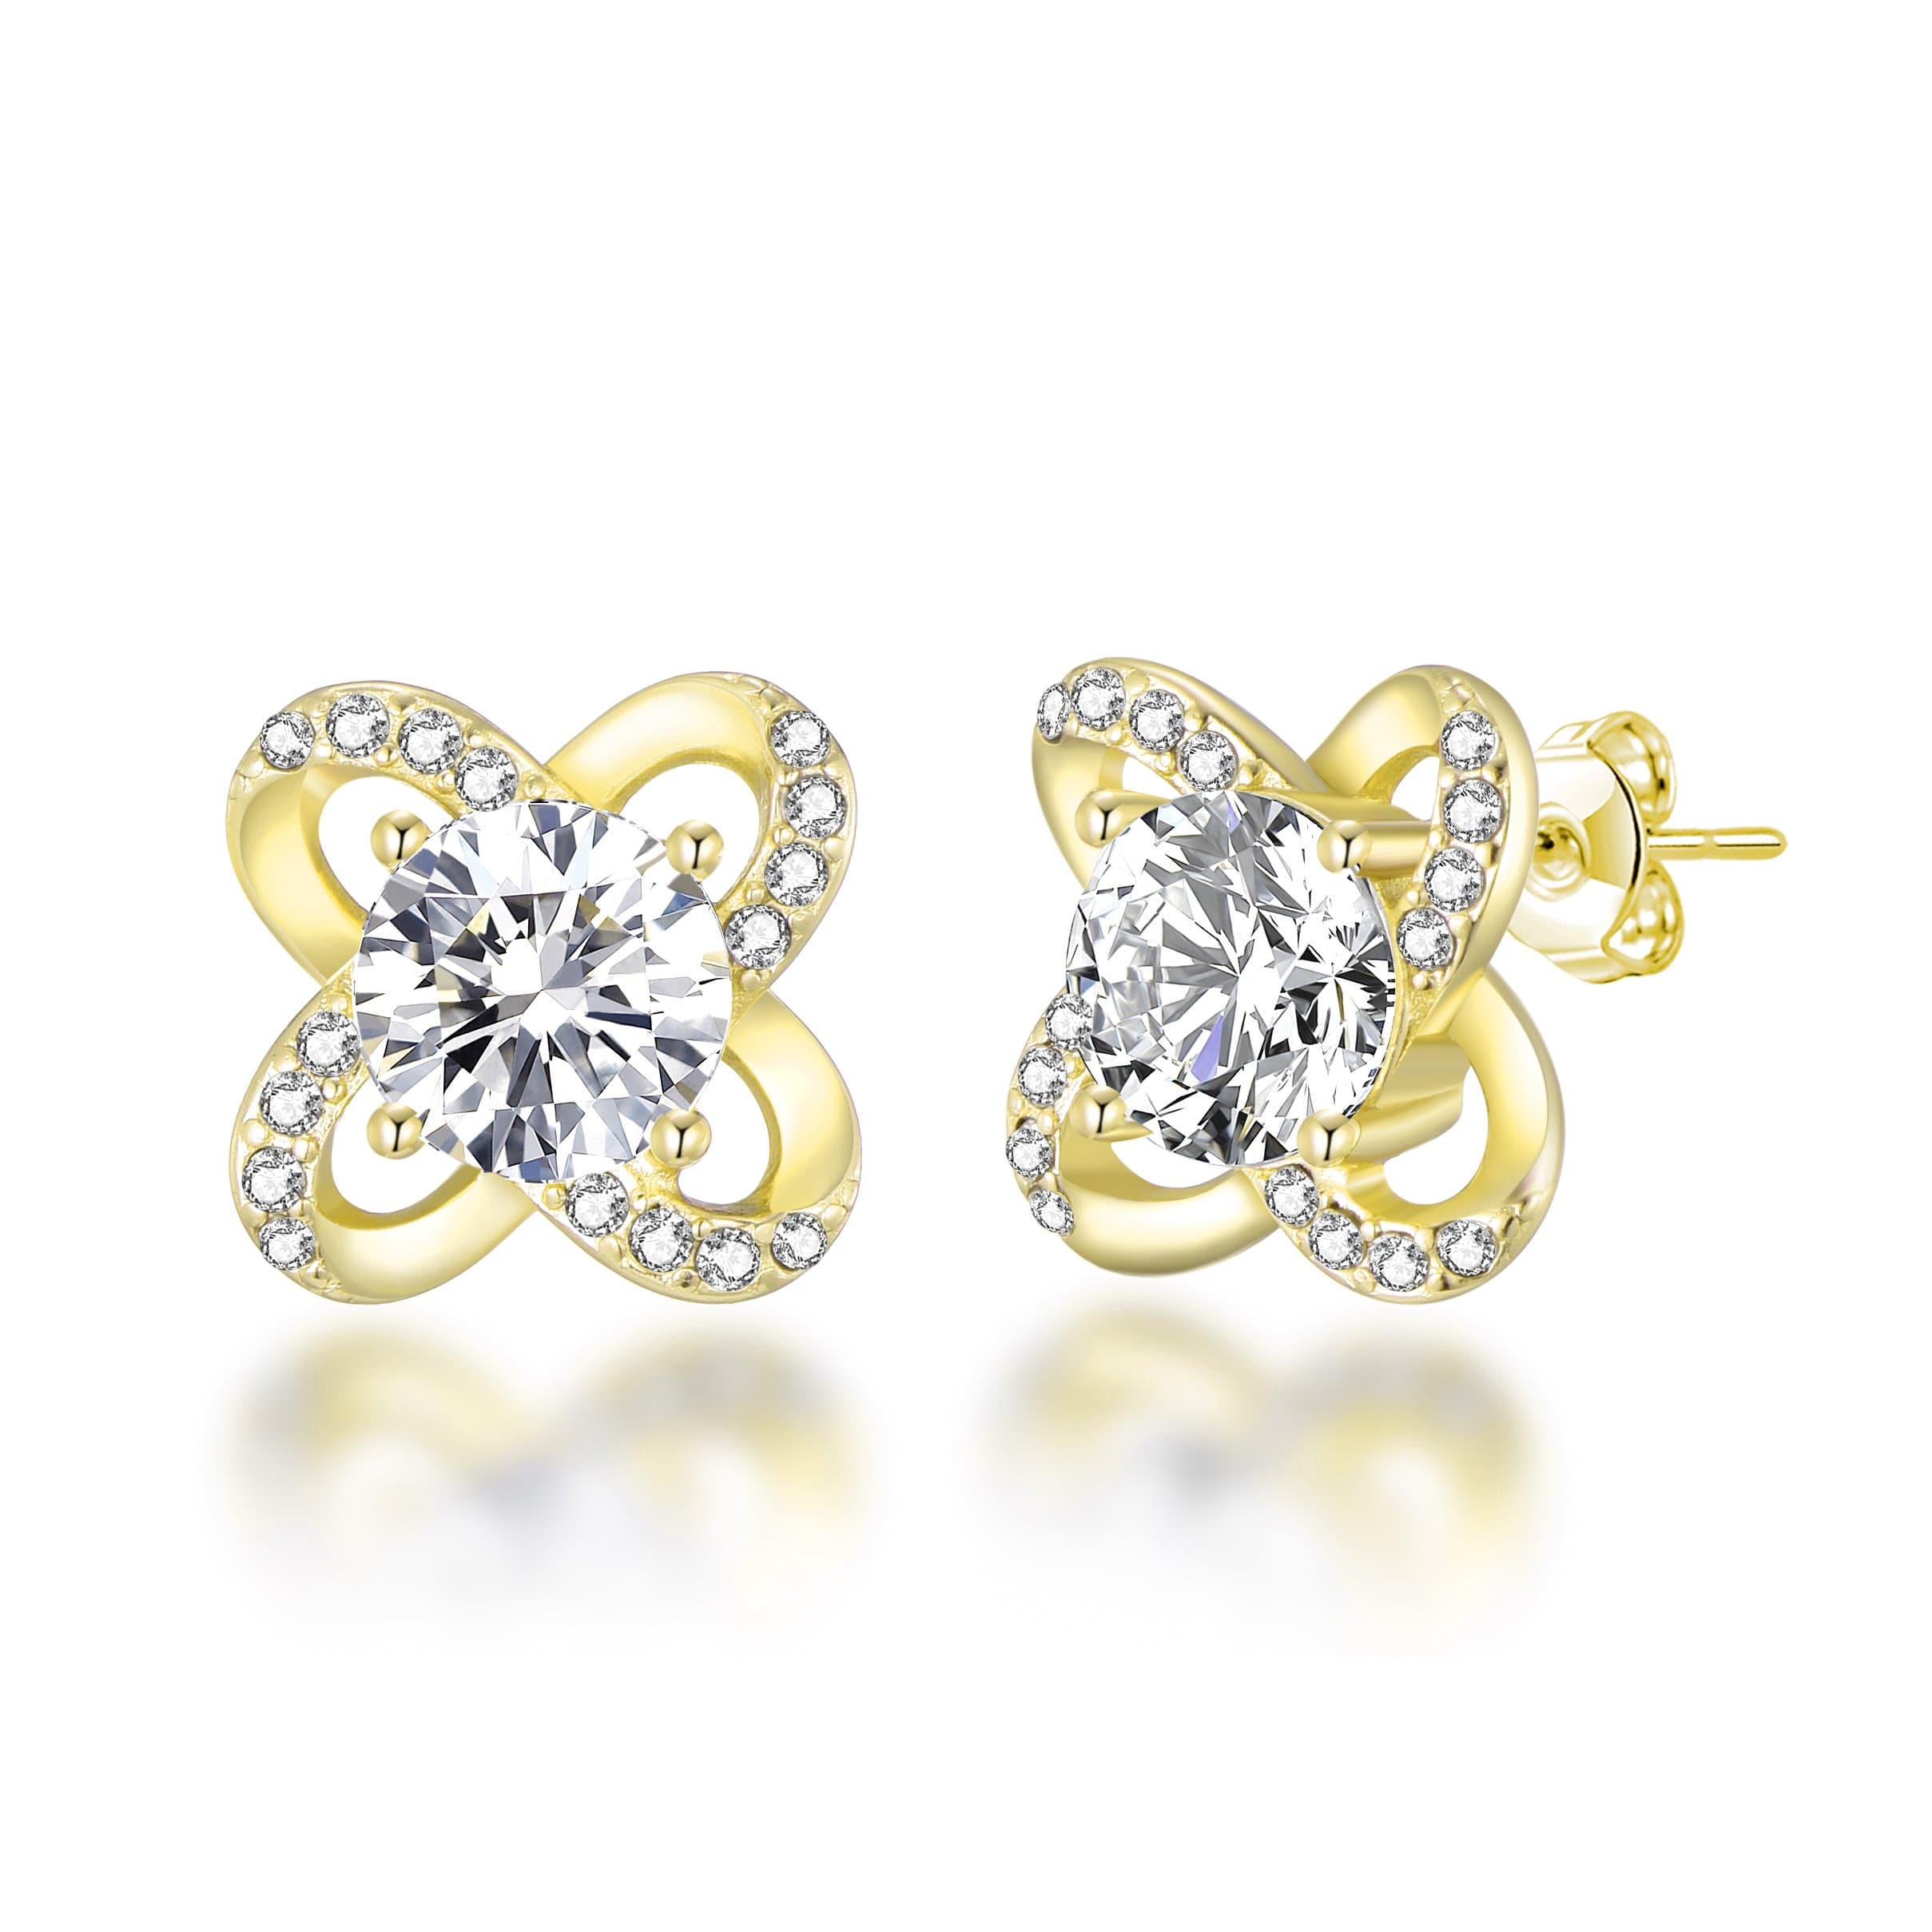 Gold Plated Orbit Earrings Created with Zircondia® Crystals by Philip Jones Jewellery